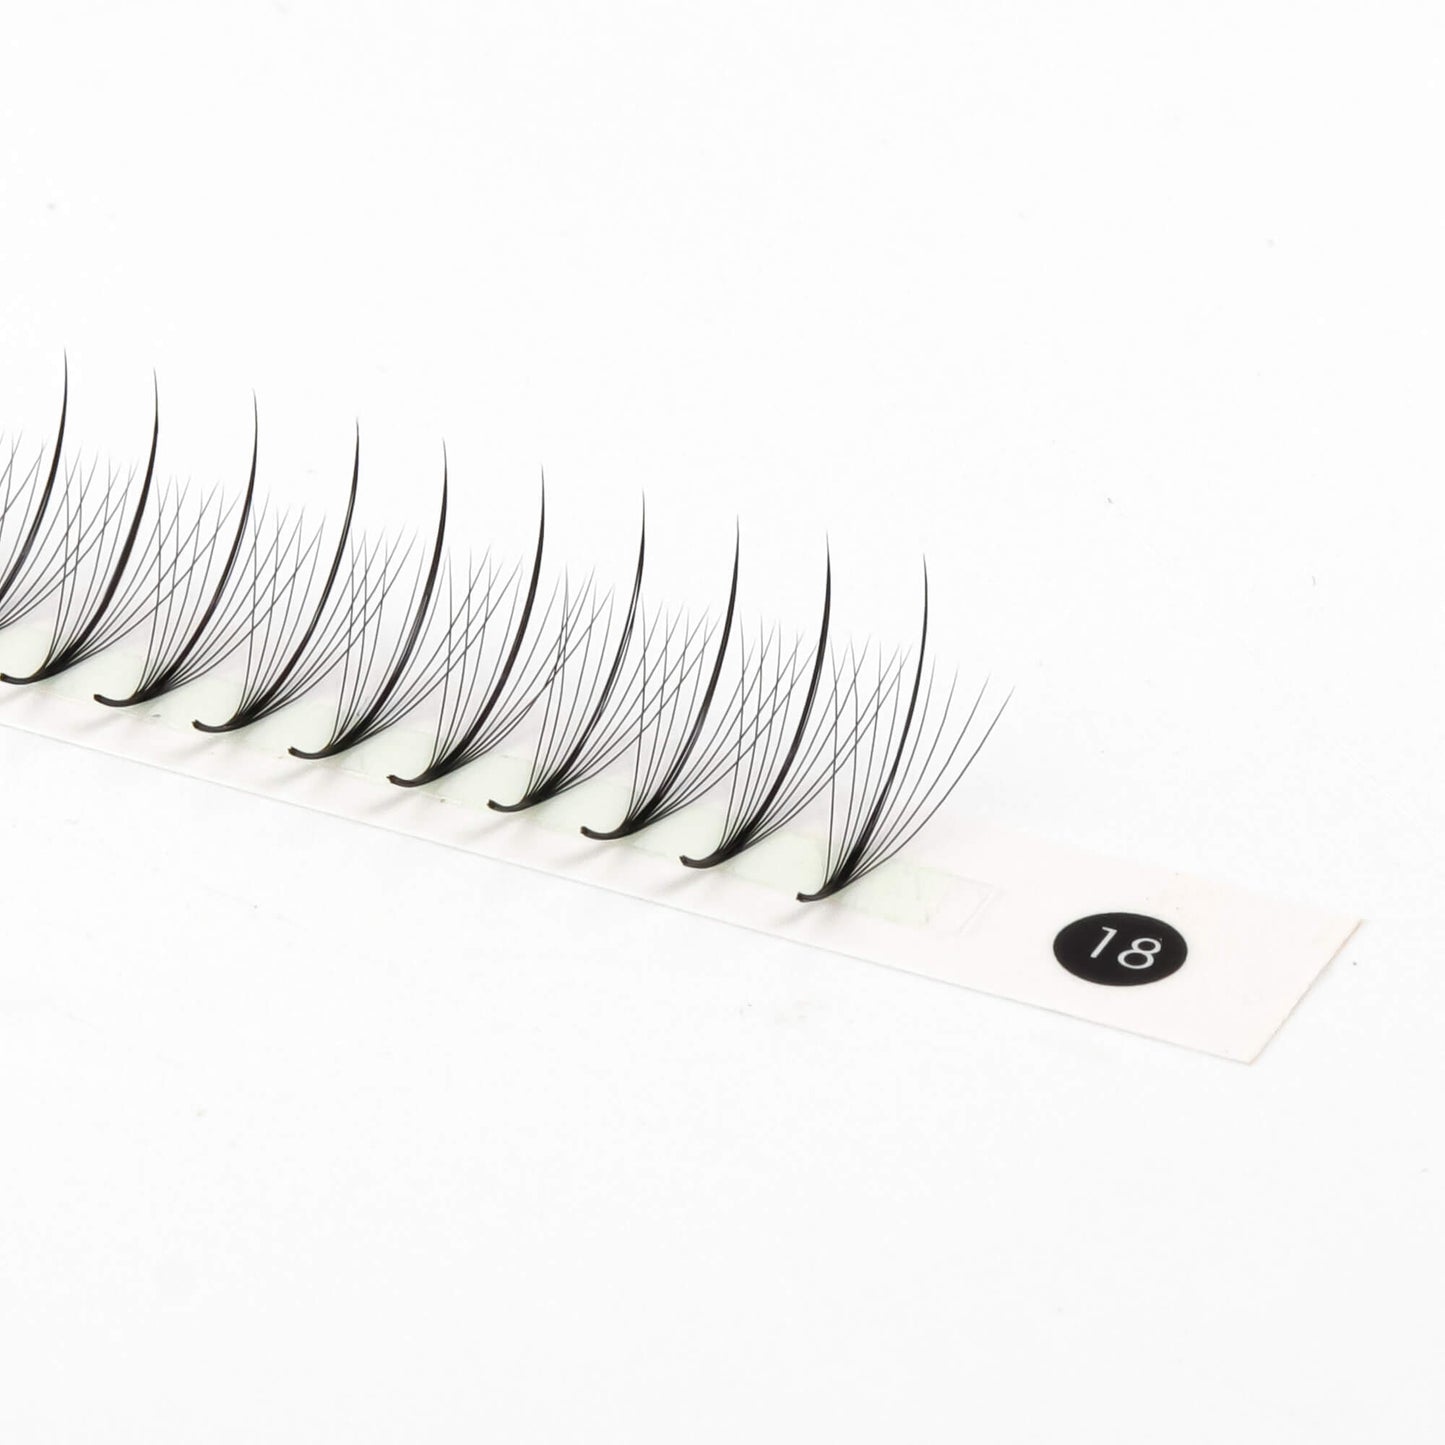 Premium wispy fan lashes - 9D - 468 fans - volume wispy lash extensions